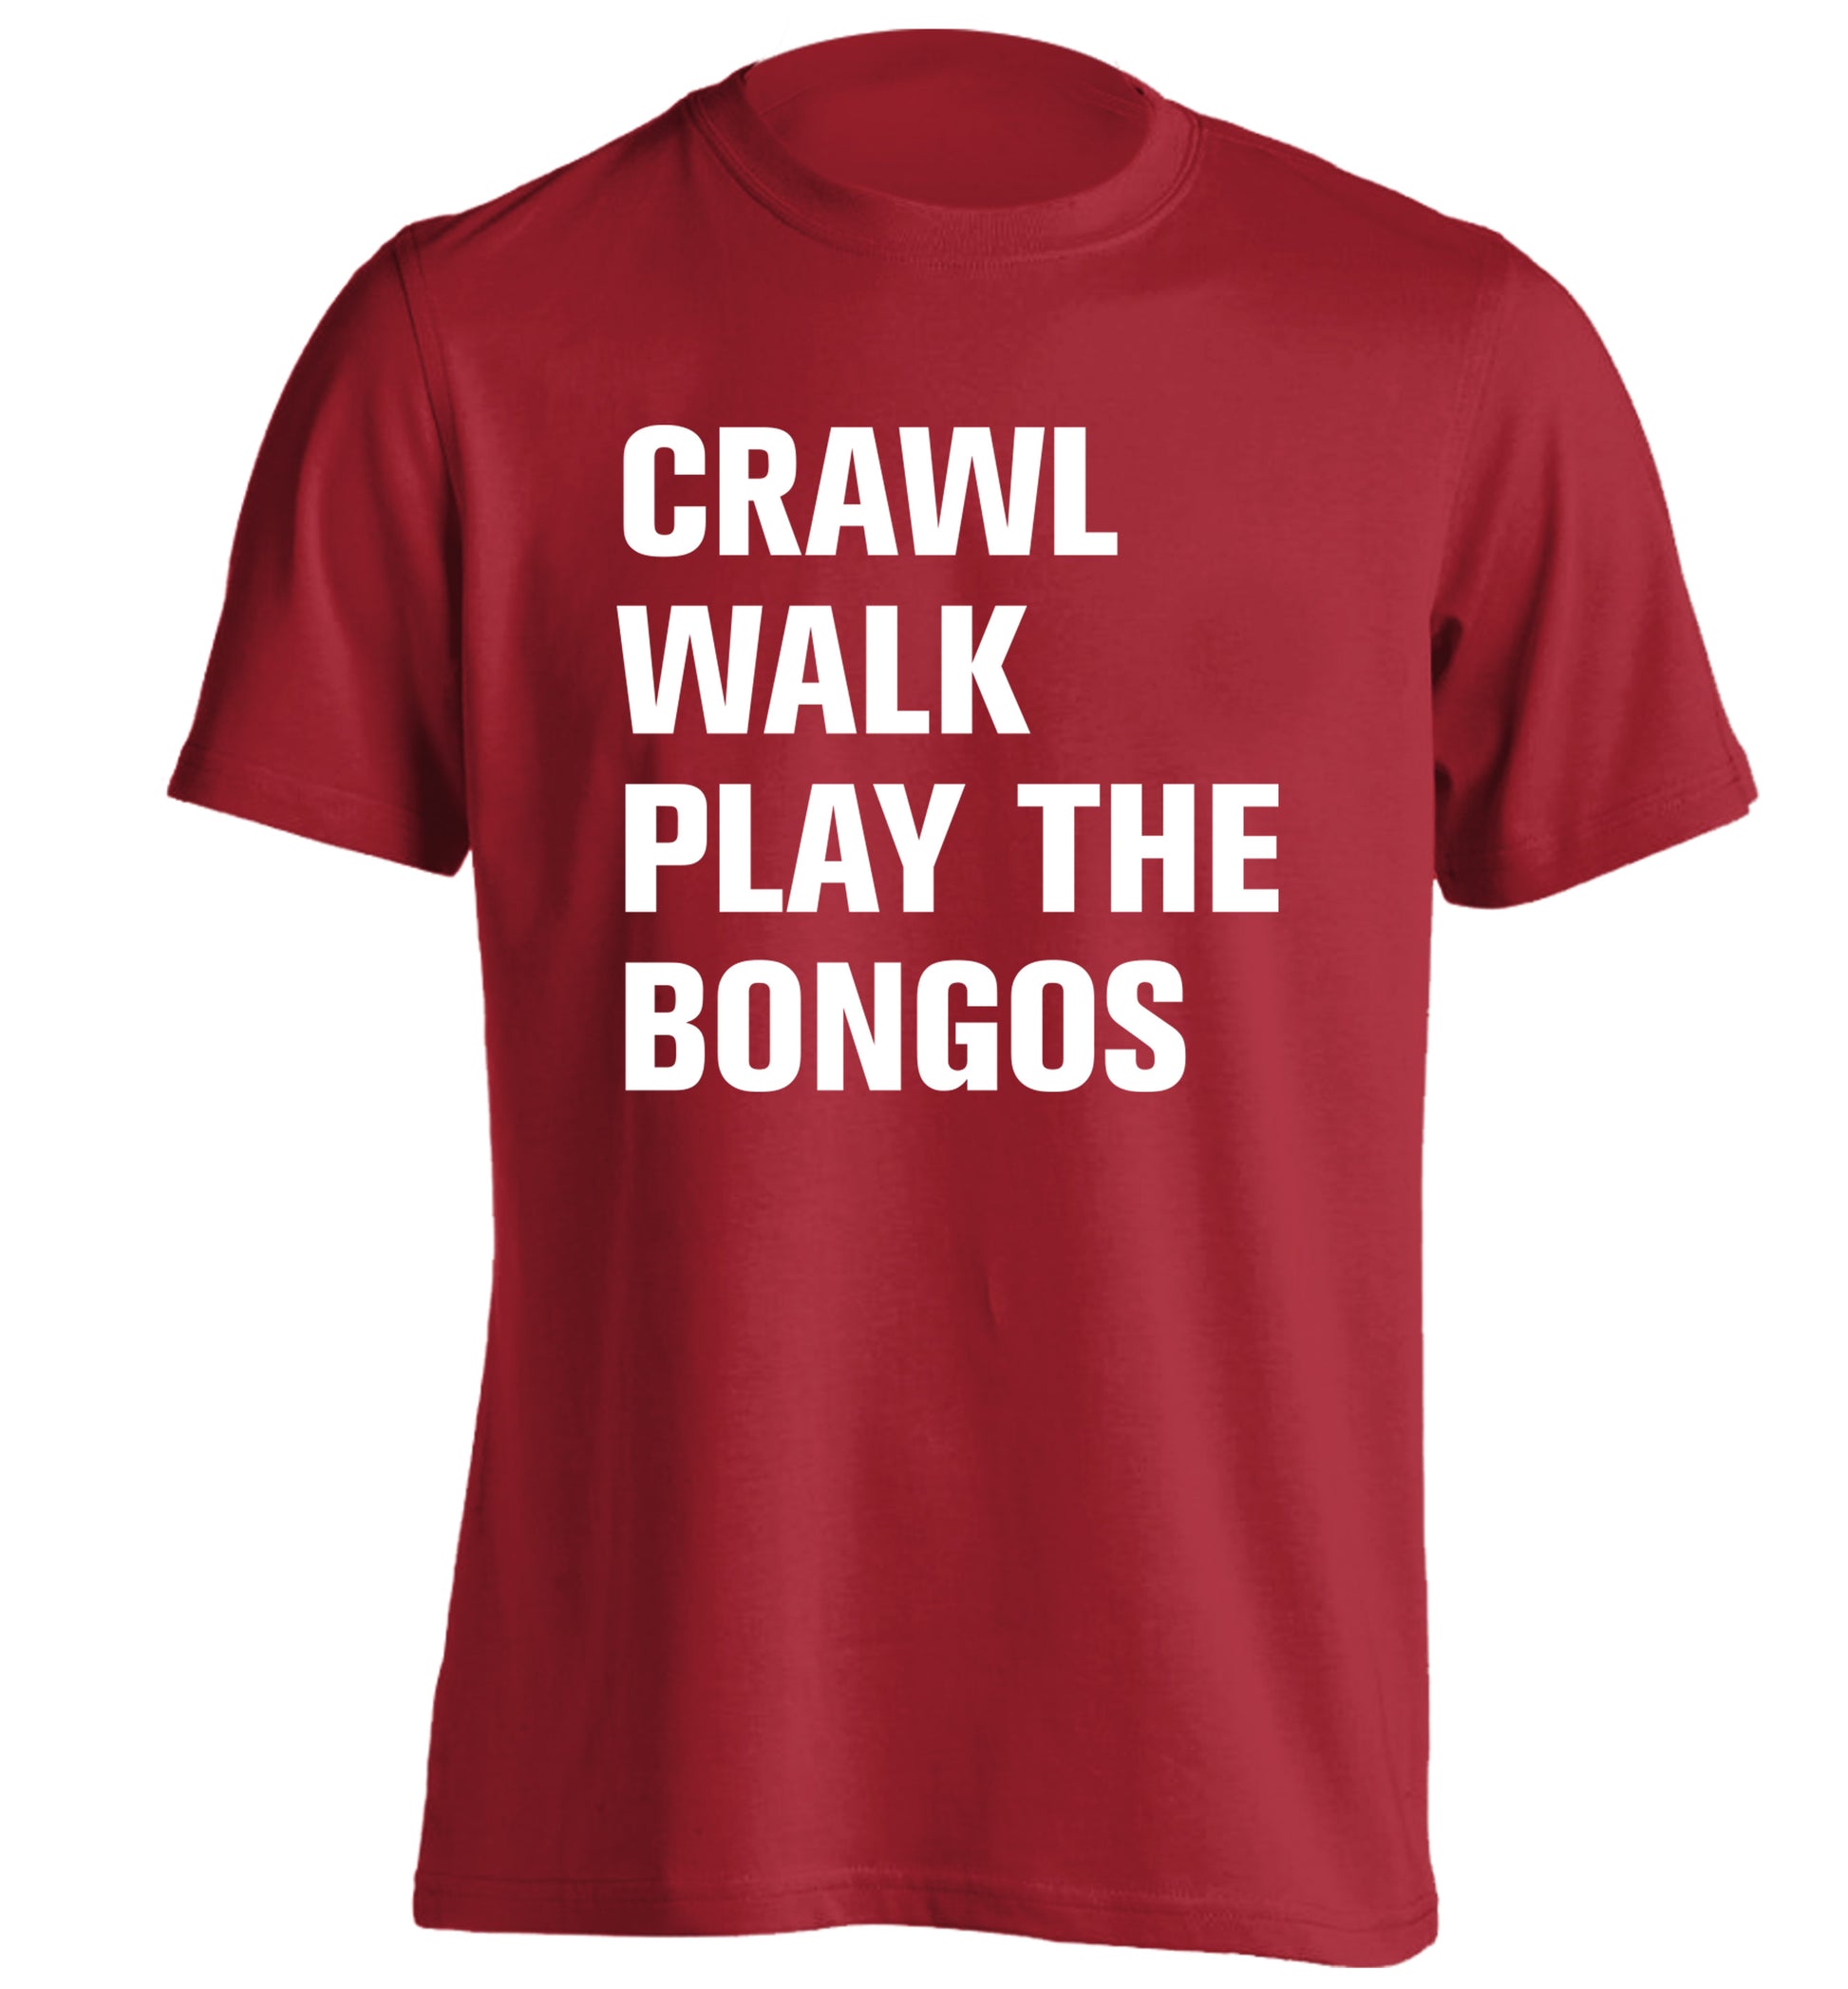 Crawl Walk Play Bongos adults unisex red Tshirt 2XL